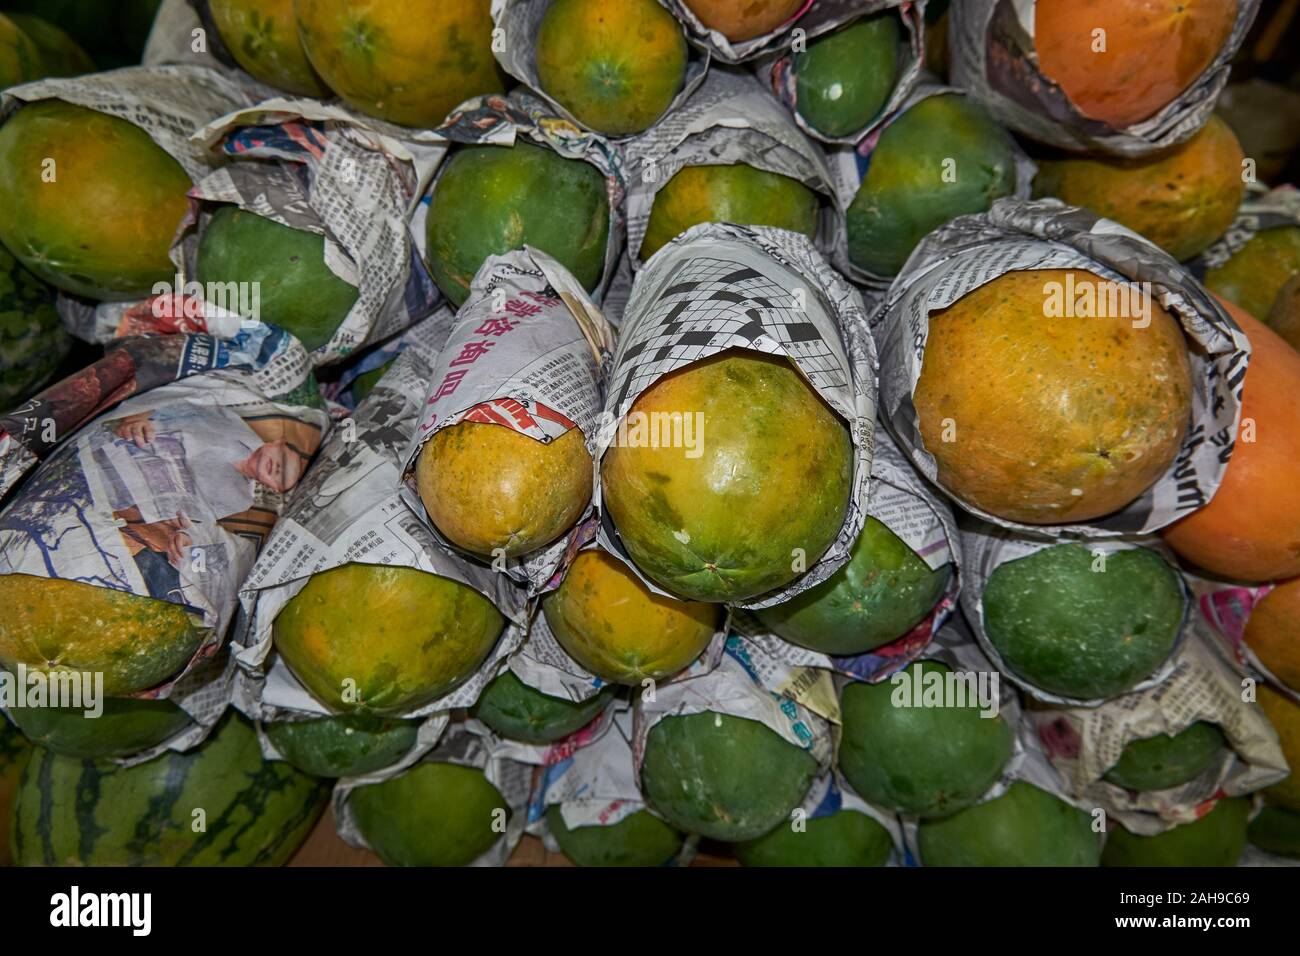 Inside Pasar Tanjung, fresh mangos, papaya for sale, all from local stalls, sellers.  In Tawau, Sabah, Borneo, Malaysia. Stock Photo